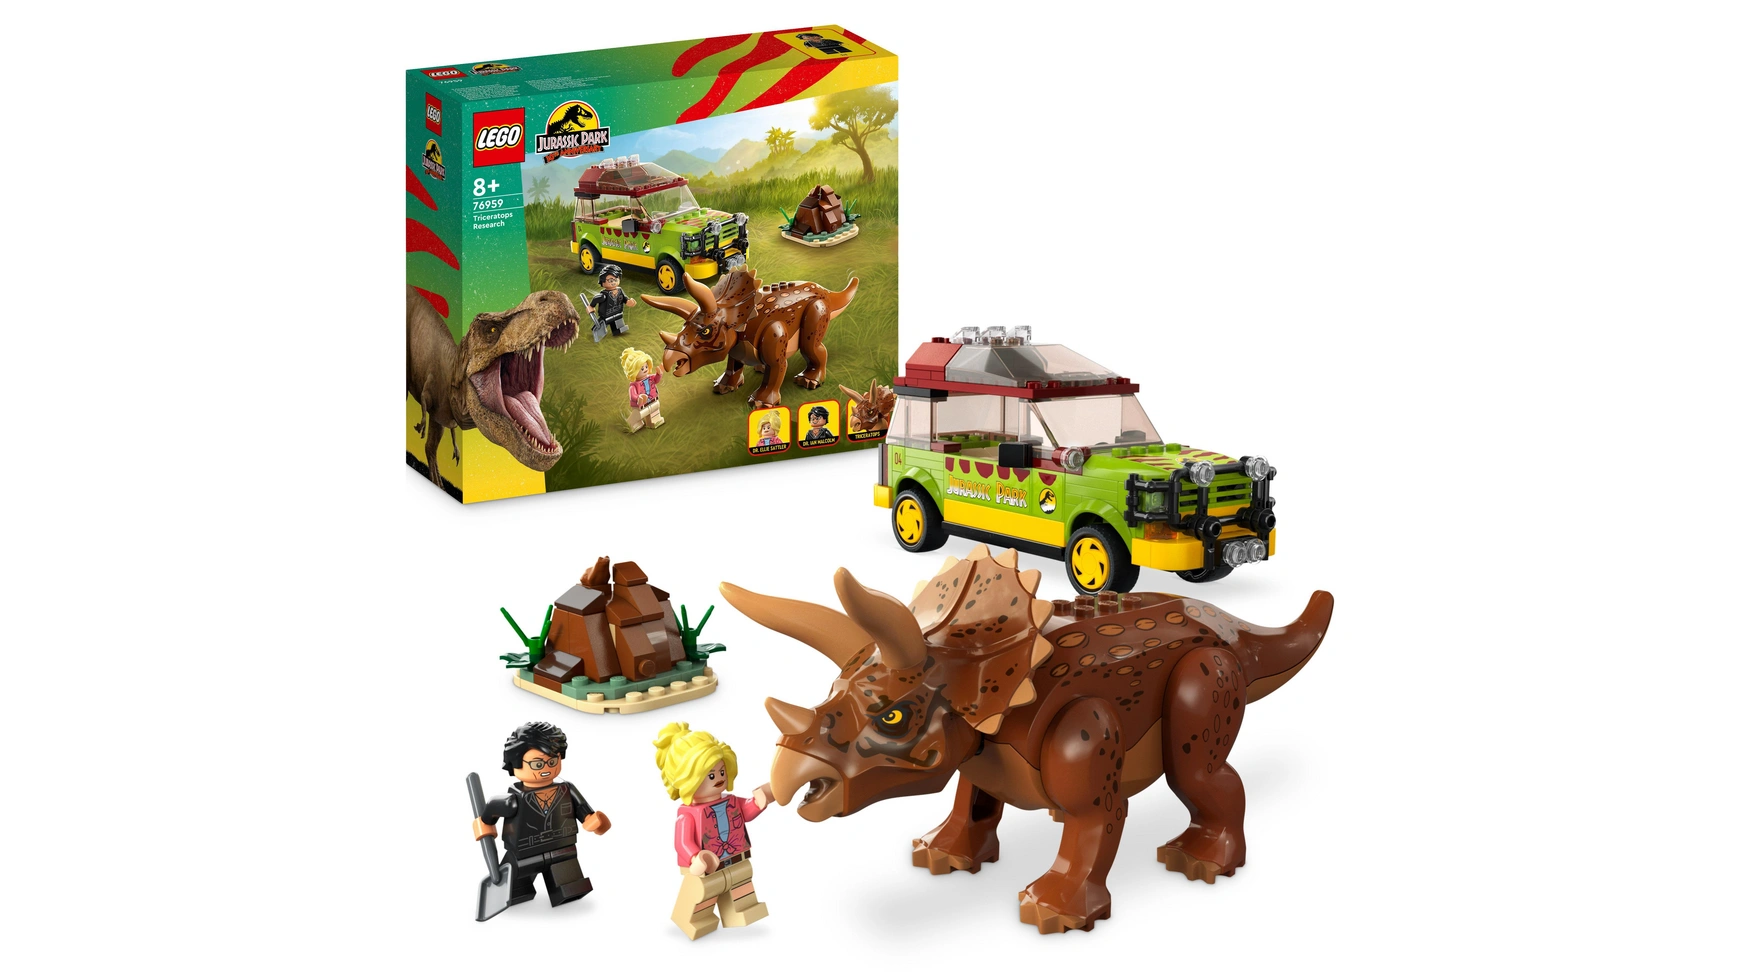 Lego Jurassic Park Исследования трицератопса минифигурка lego jw059 dennis nedry jurassic park logo on back